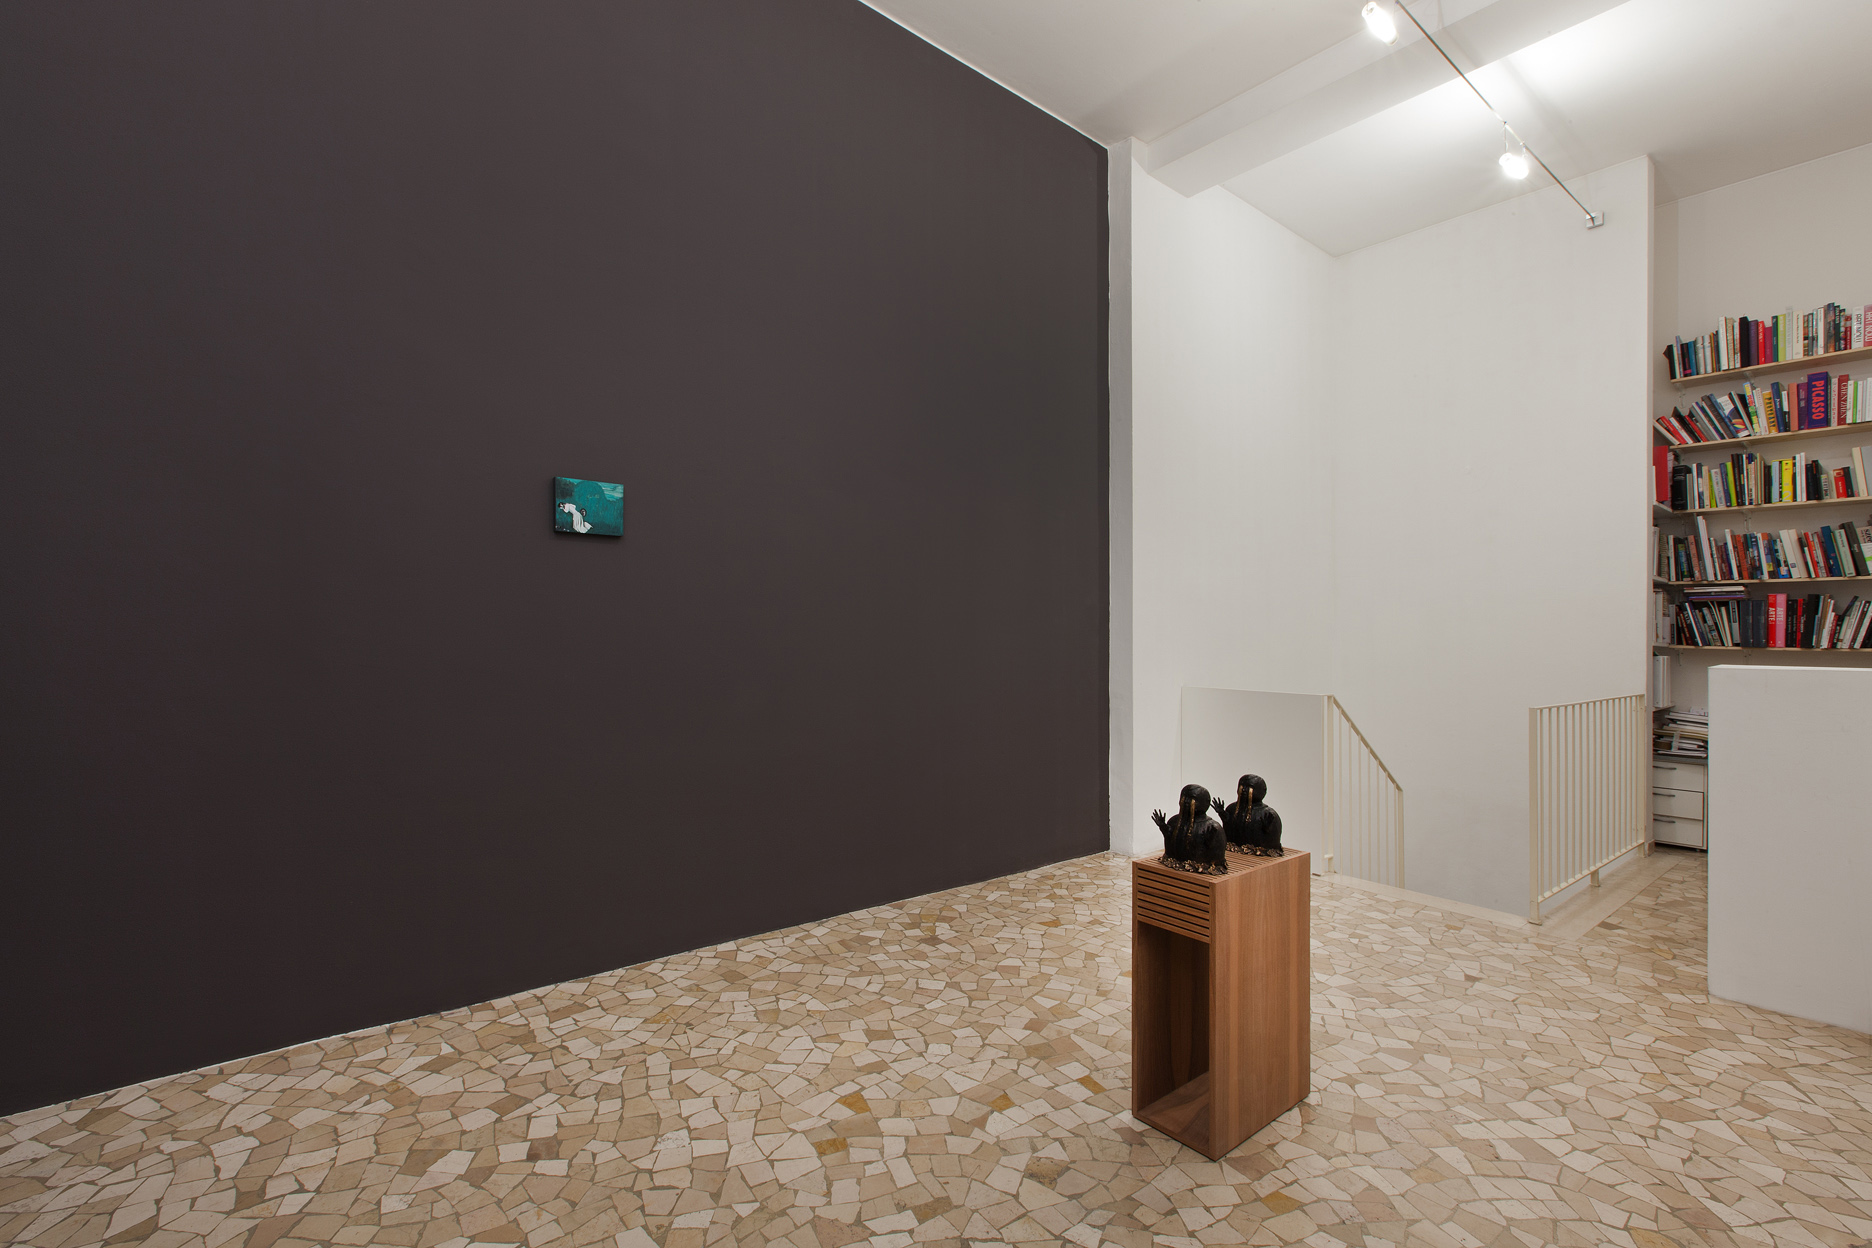 Enzo Cucchi @ FL Gallery, Milan